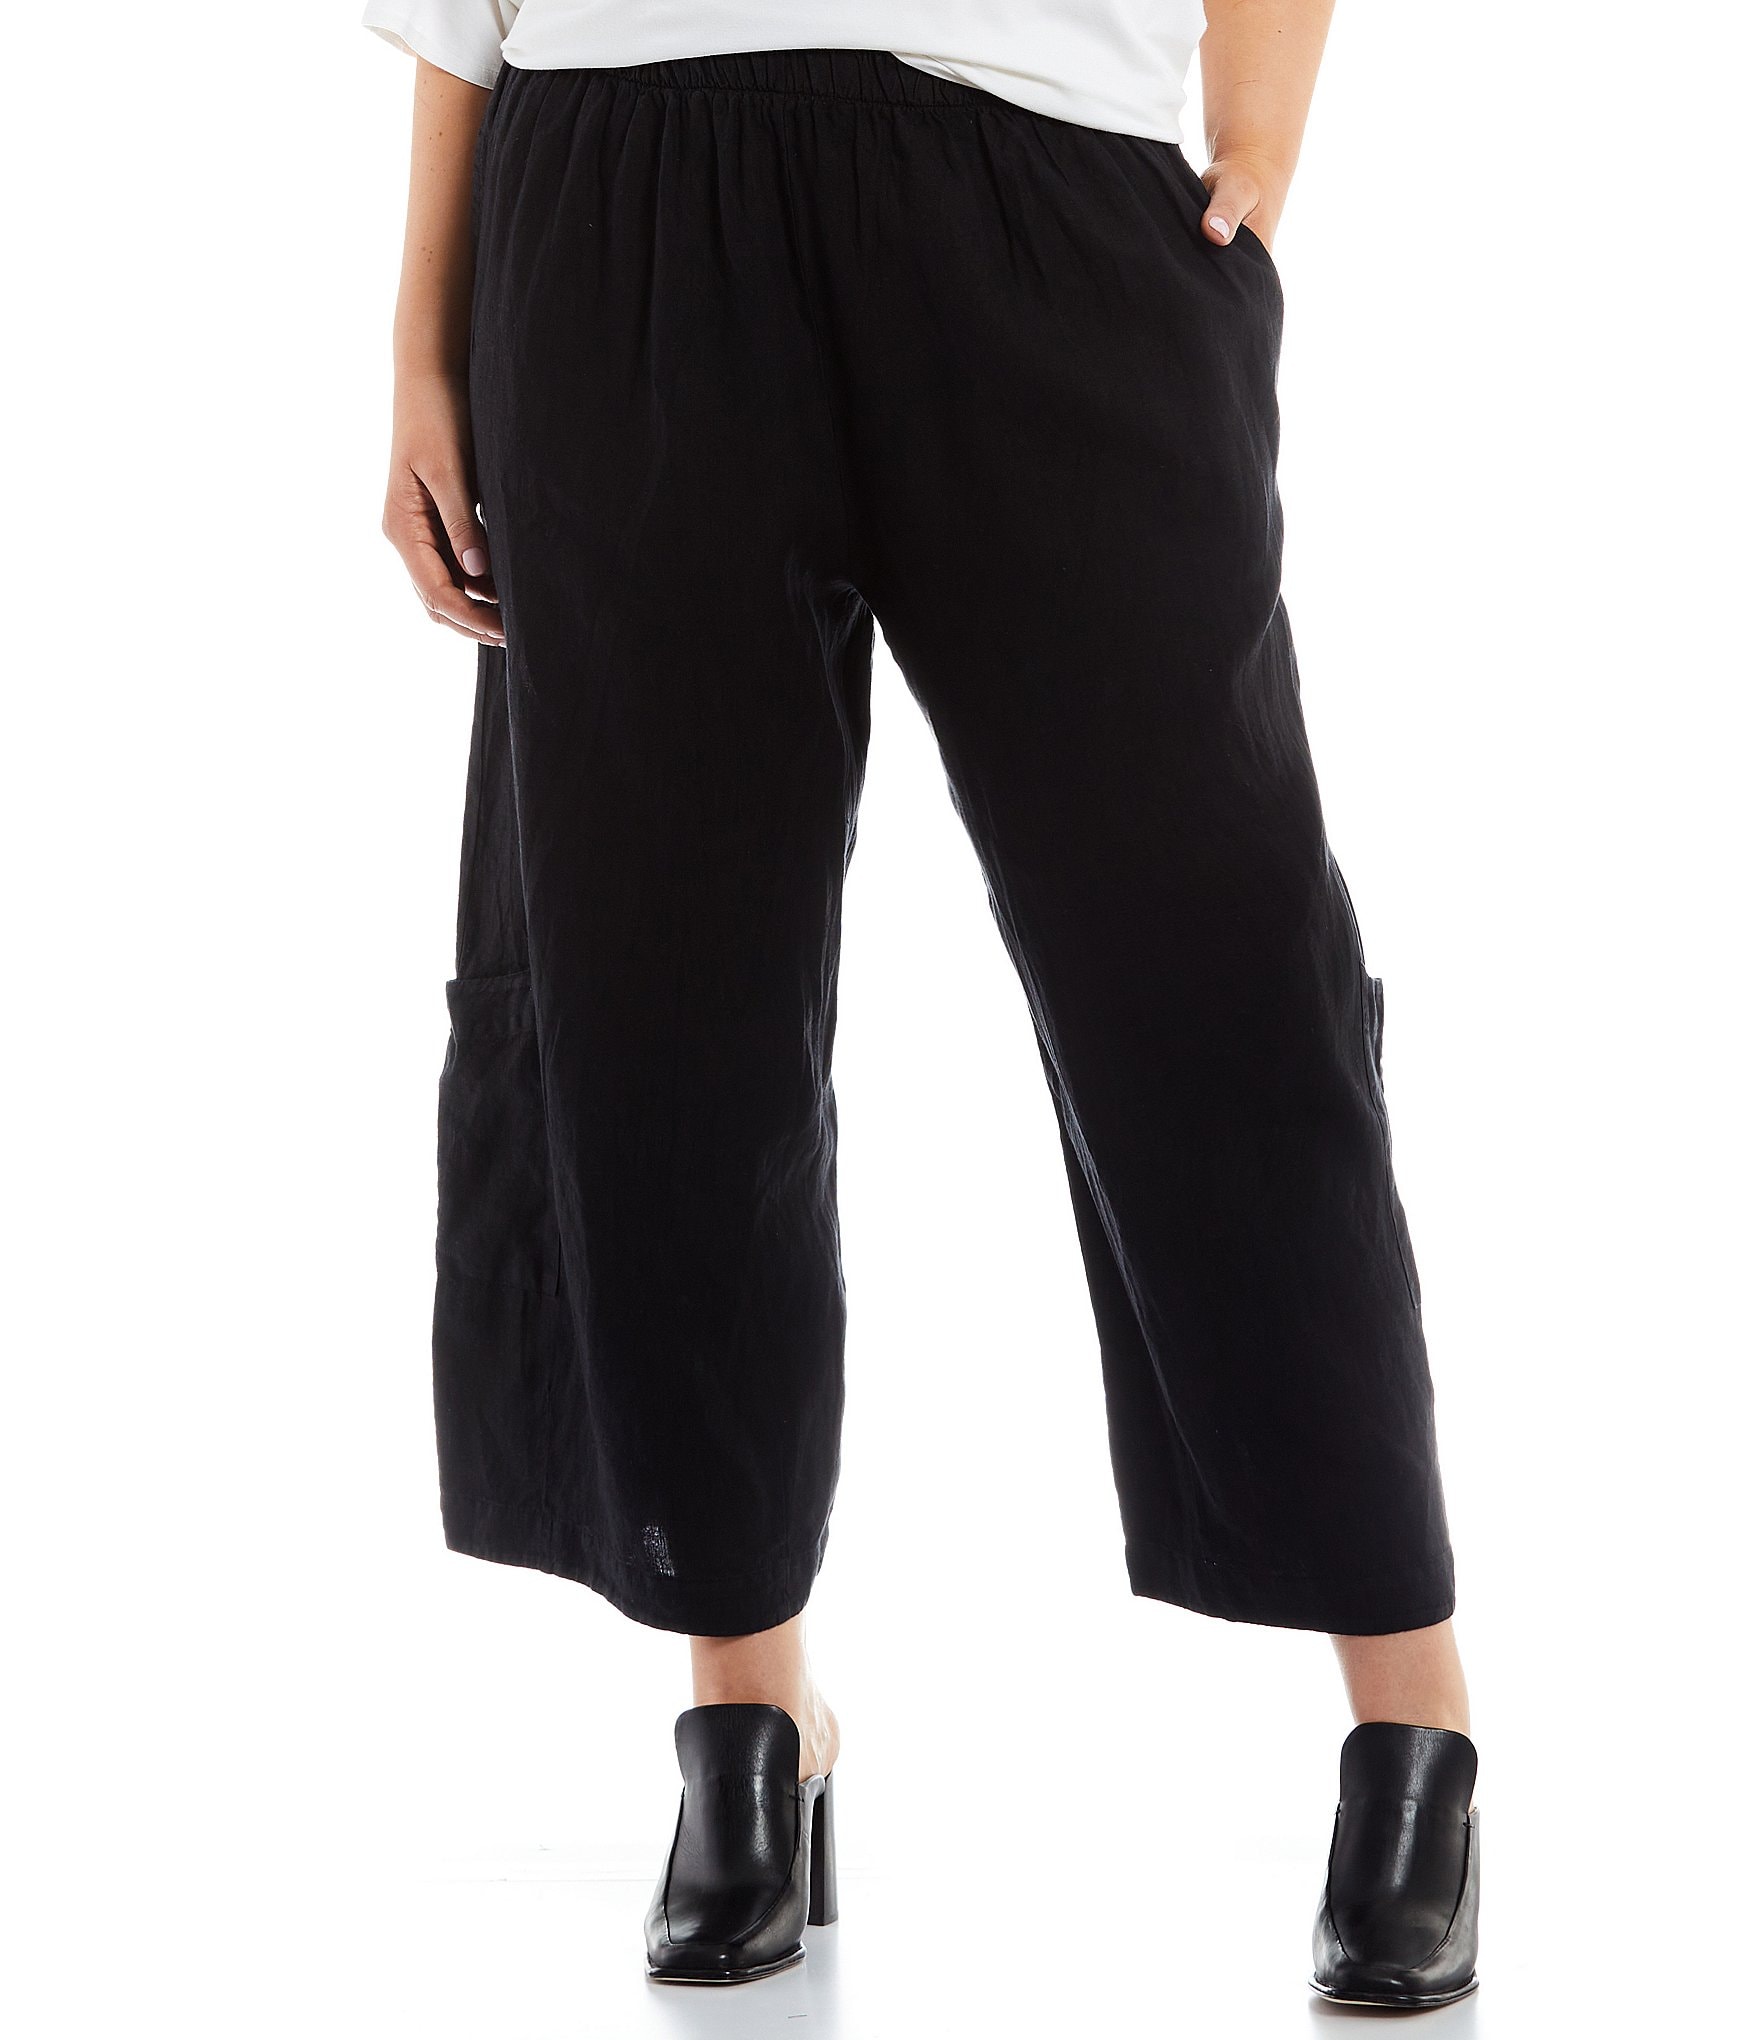 BLACK PEPPER WOMENS Crop Pants Size 16 Beige High Rise Wde Leg Elastic  Waist $21.80 - PicClick AU